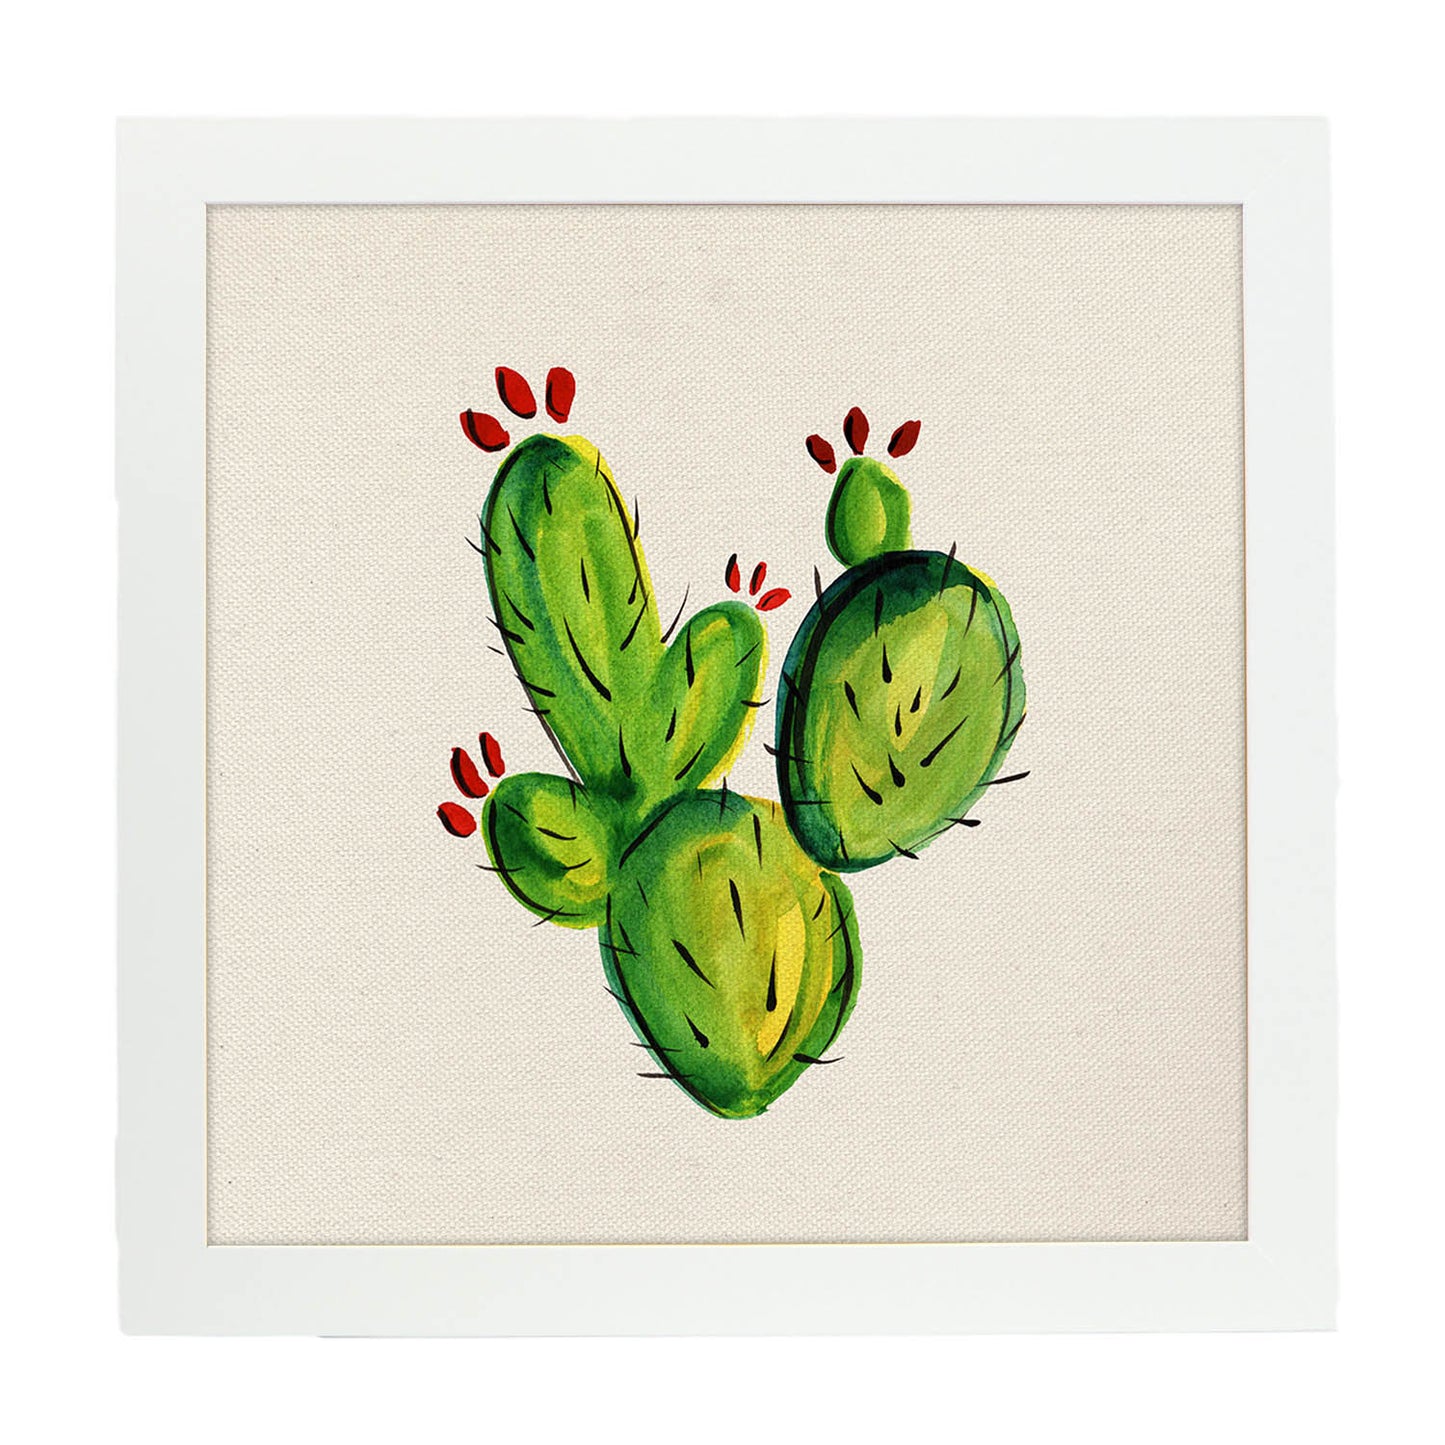 Poster de cactus dibujado. Lámina de Mírame, no me toques-Artwork-Nacnic-25x25 cm-Marco Blanco-Nacnic Estudio SL